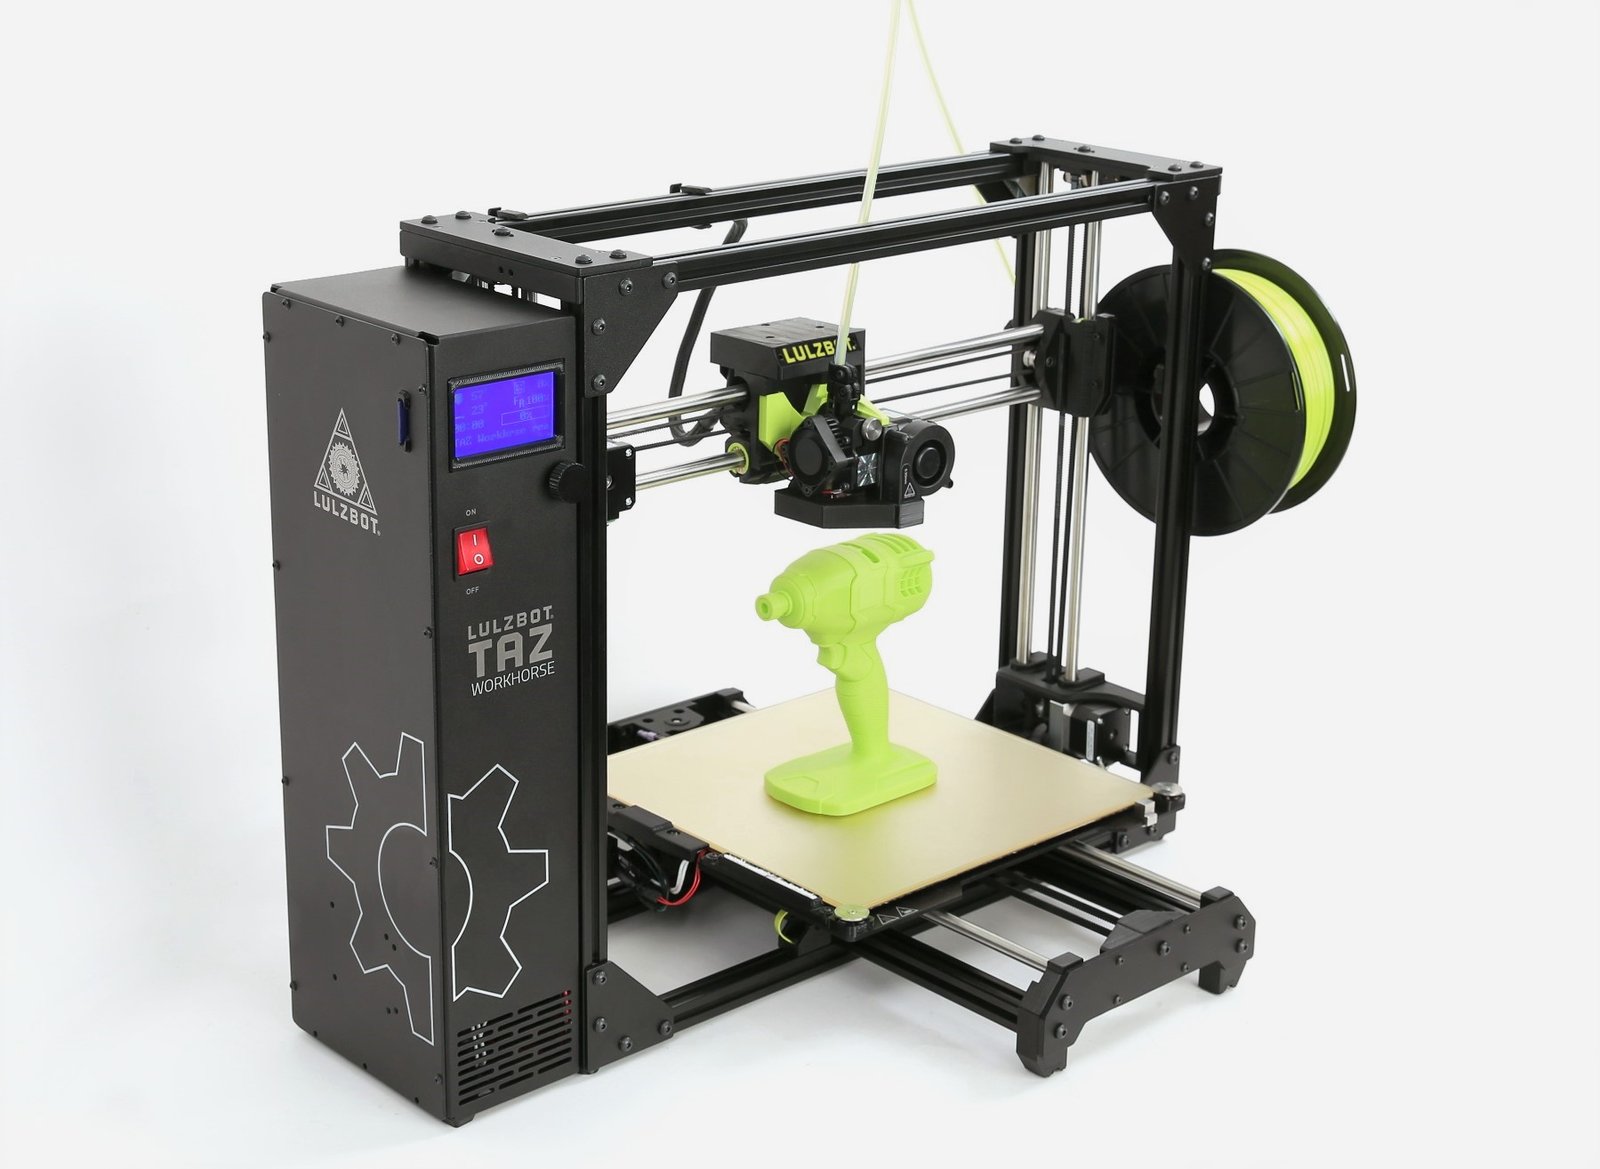 The LulzBot TAZ Workhorse 3D printer. Photo via LulzBot.